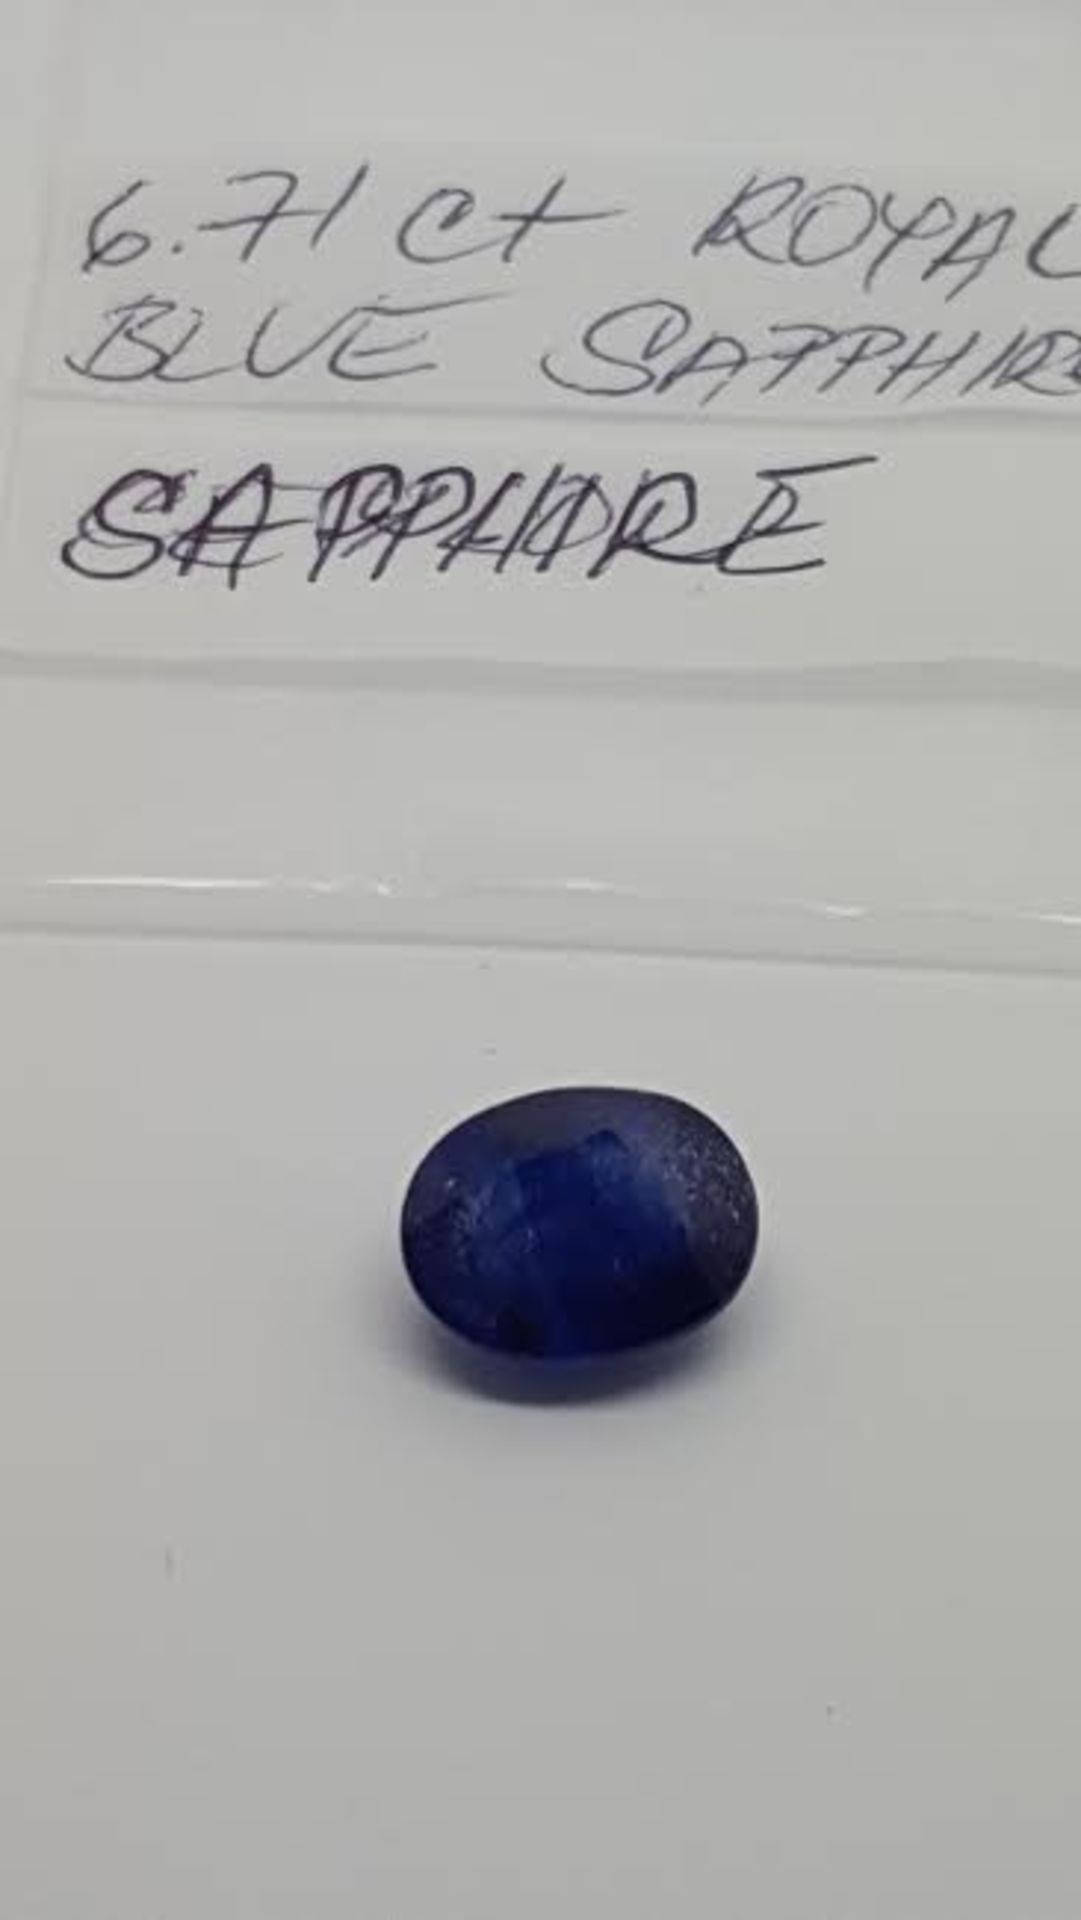 6.71 ct royal blue sapphire